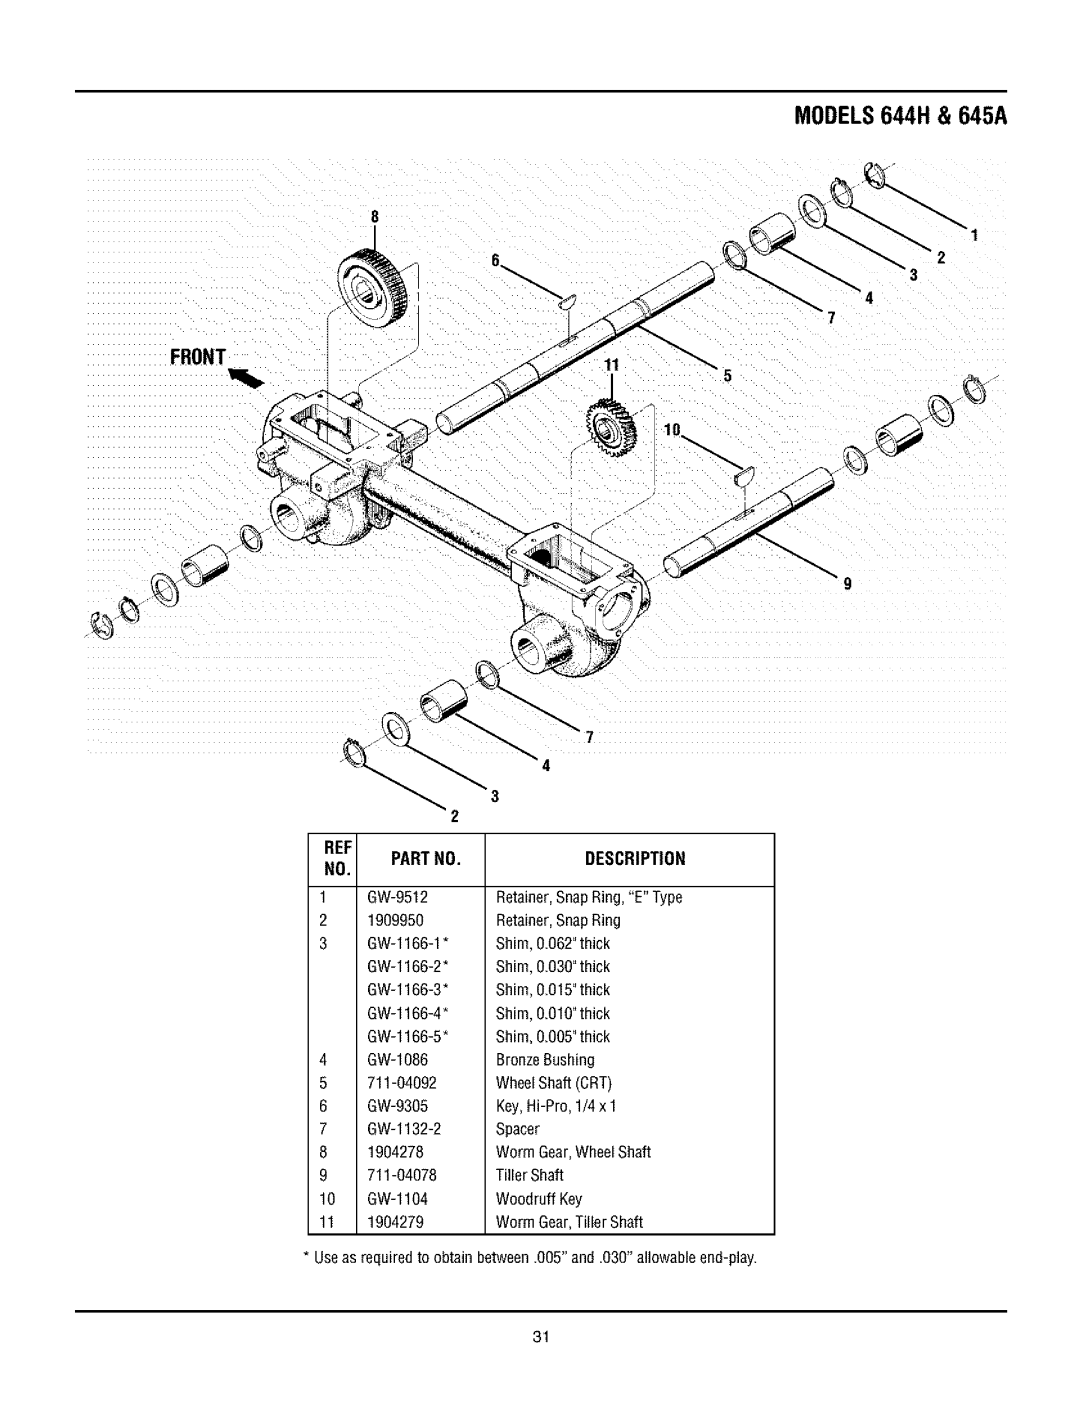 Troy-Bilt manual FRONT11, MODELS644H & 645A, 8 3 4, Partno, Description 